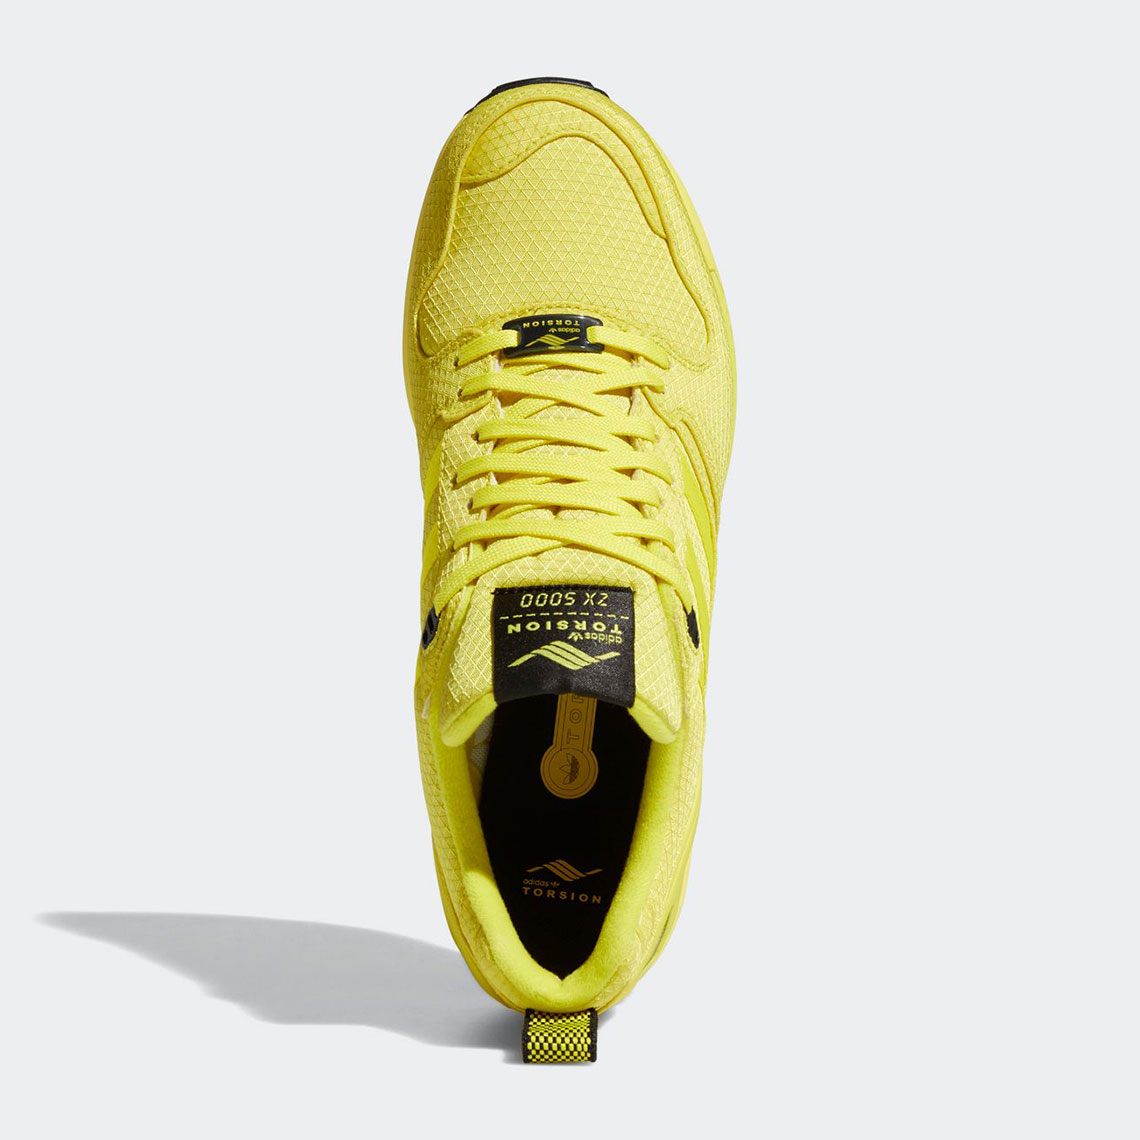 Adidas Zx5000 Bright Yellow Fz4645 6